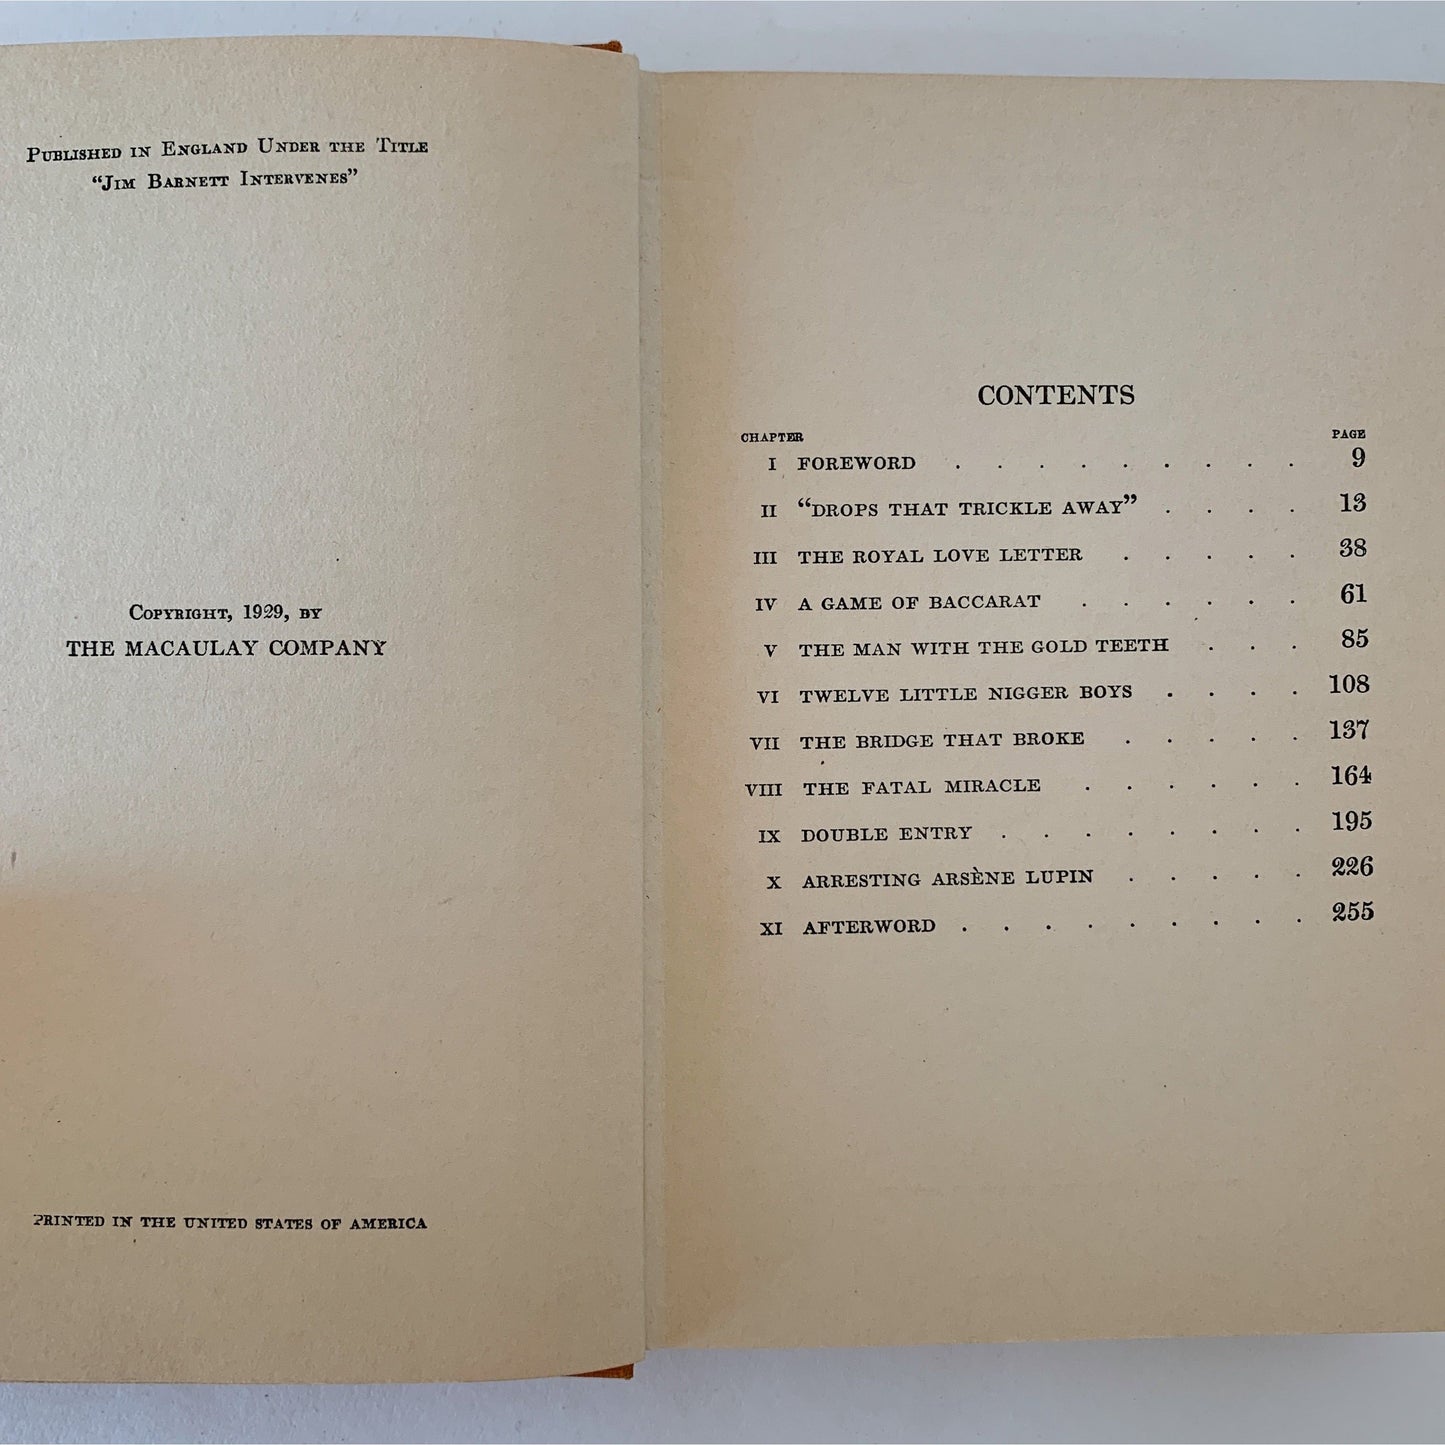 RARE, Arsene Lupin Intervenes, First American Edition, 1929, Hardcover